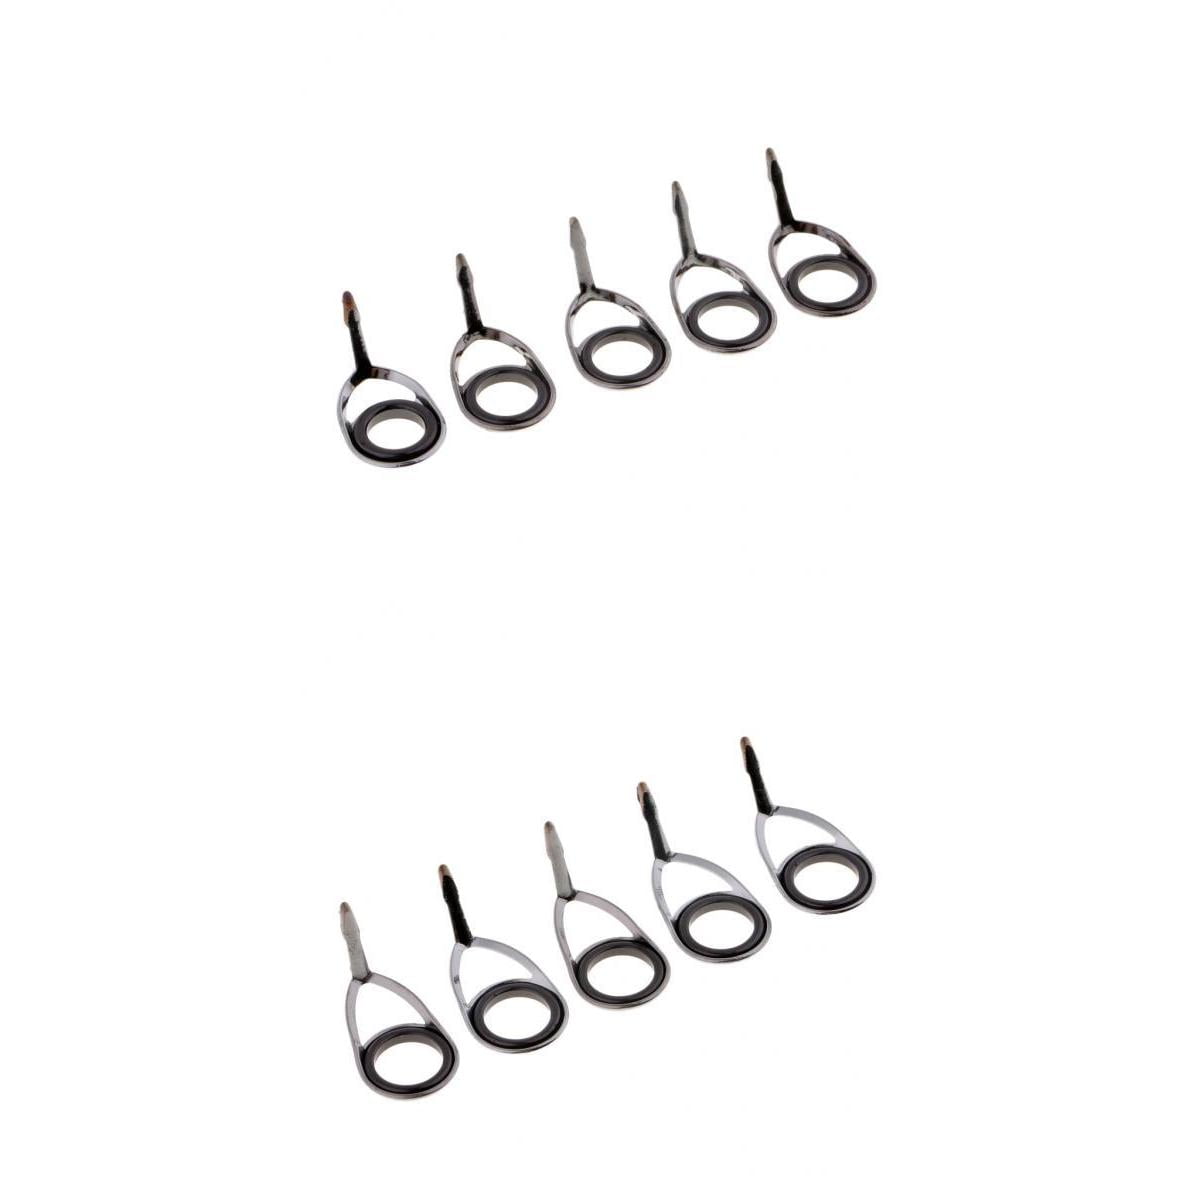 10pcs Stainless Steel Fishing Rod Guide Tip Repair Kit Eye Ring Replacement 